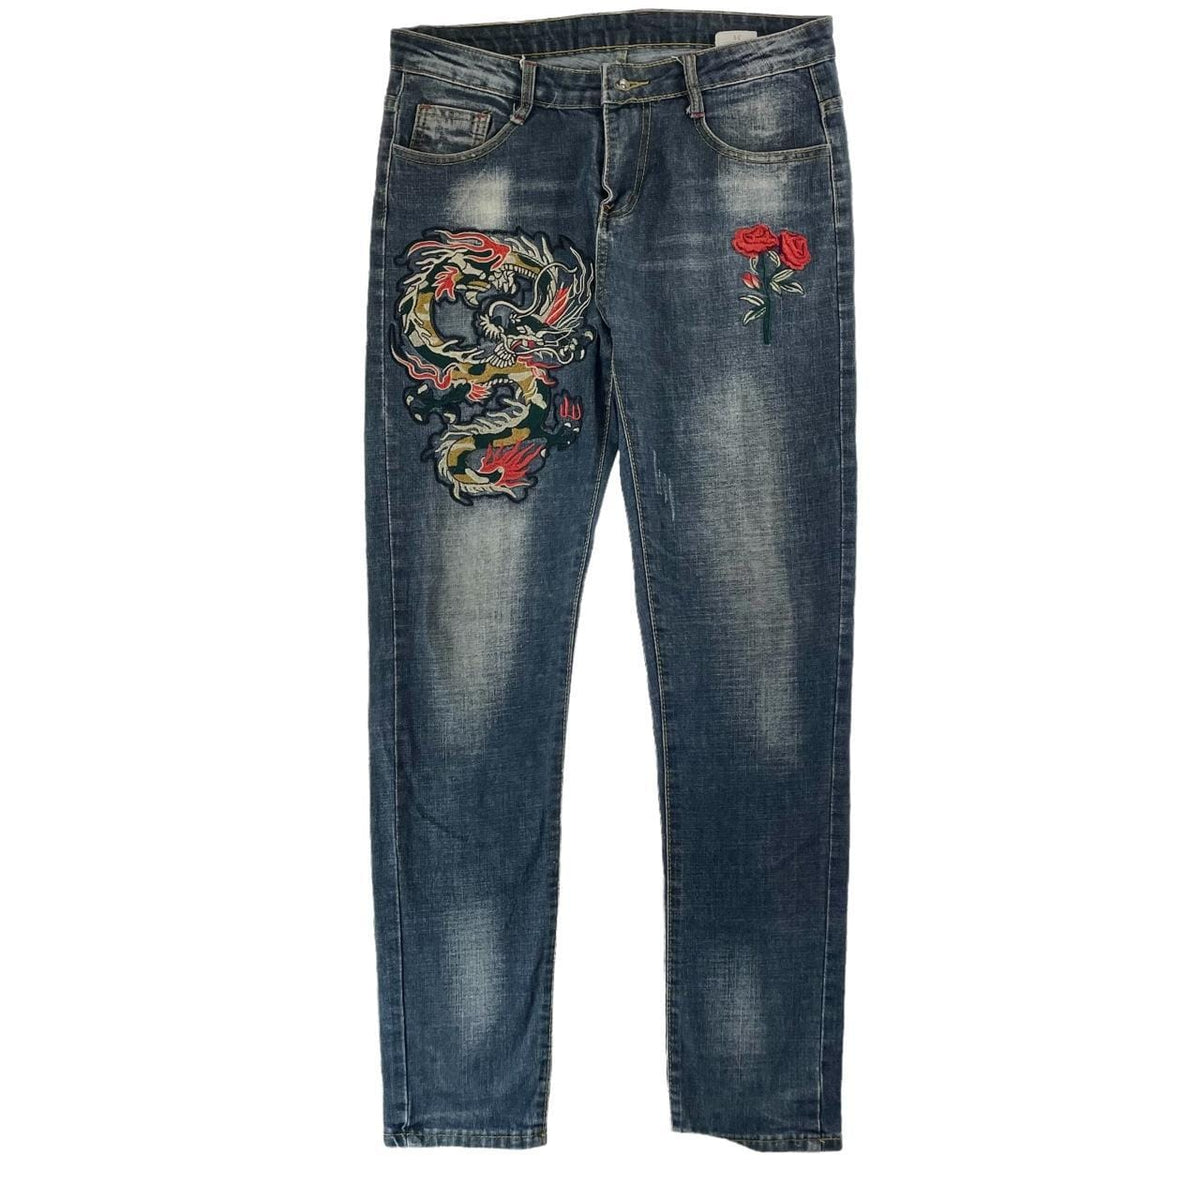 Vintage Dragon Japanese denim jeans trousers W30